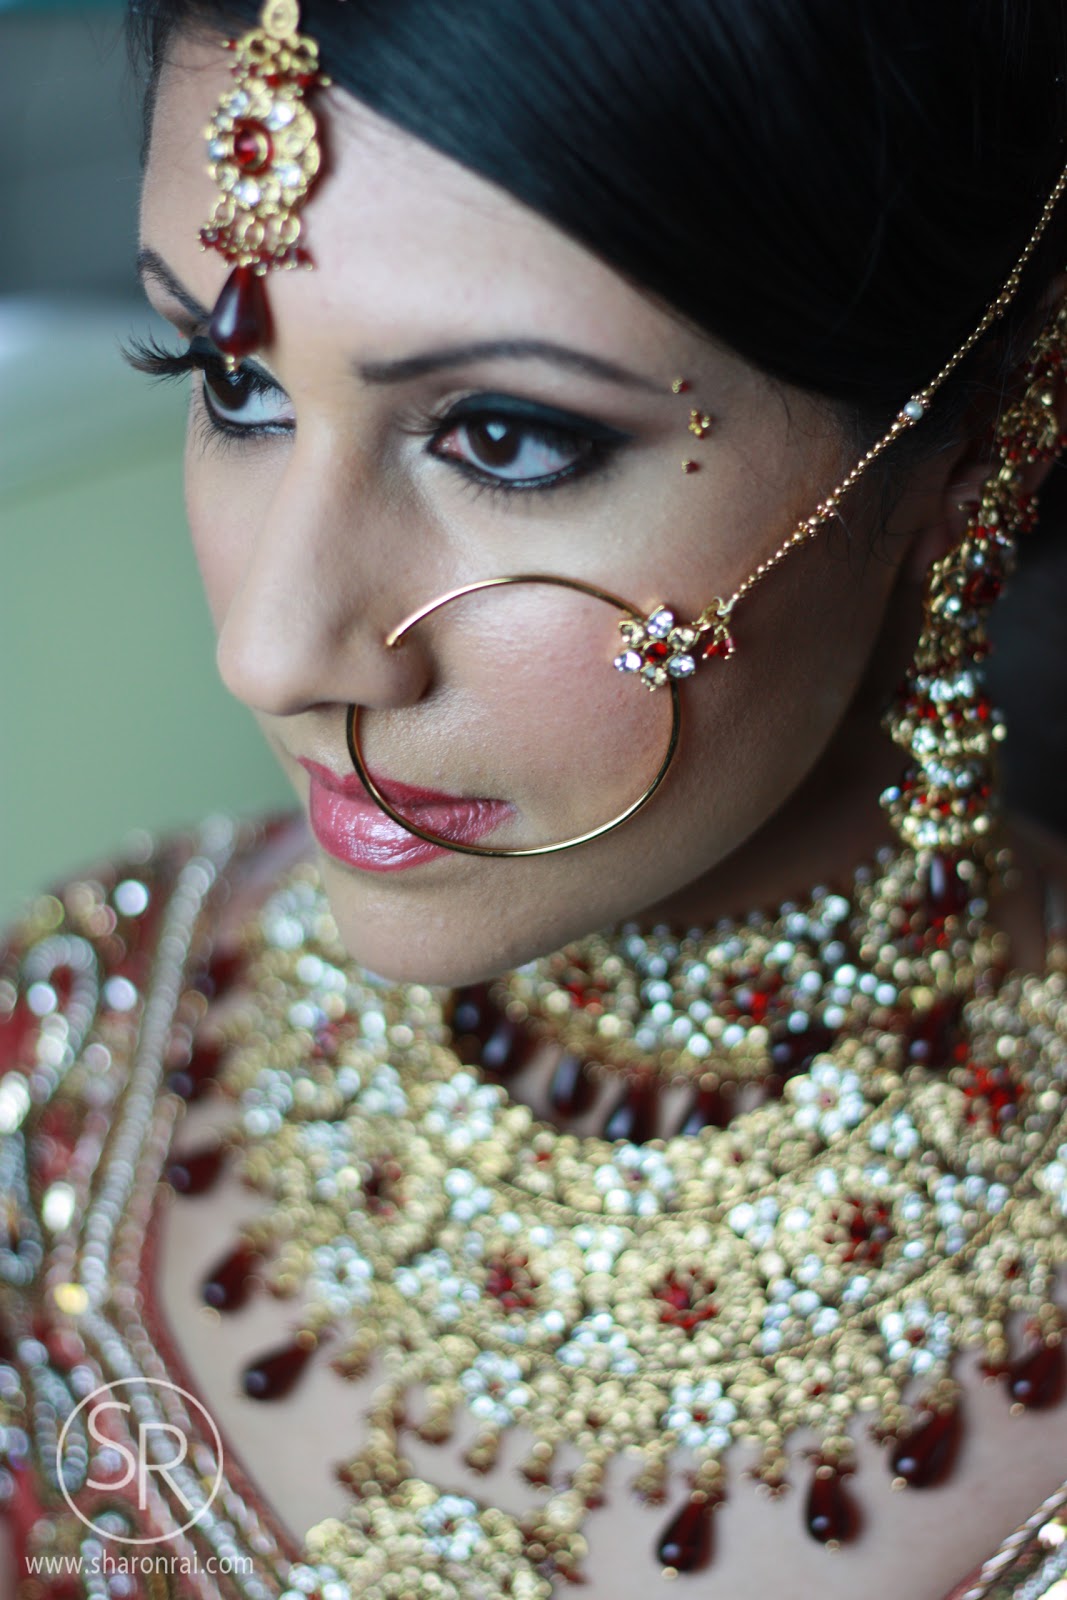 Sharon Rai Hair & Makeup Artistry East Indian Wedding in